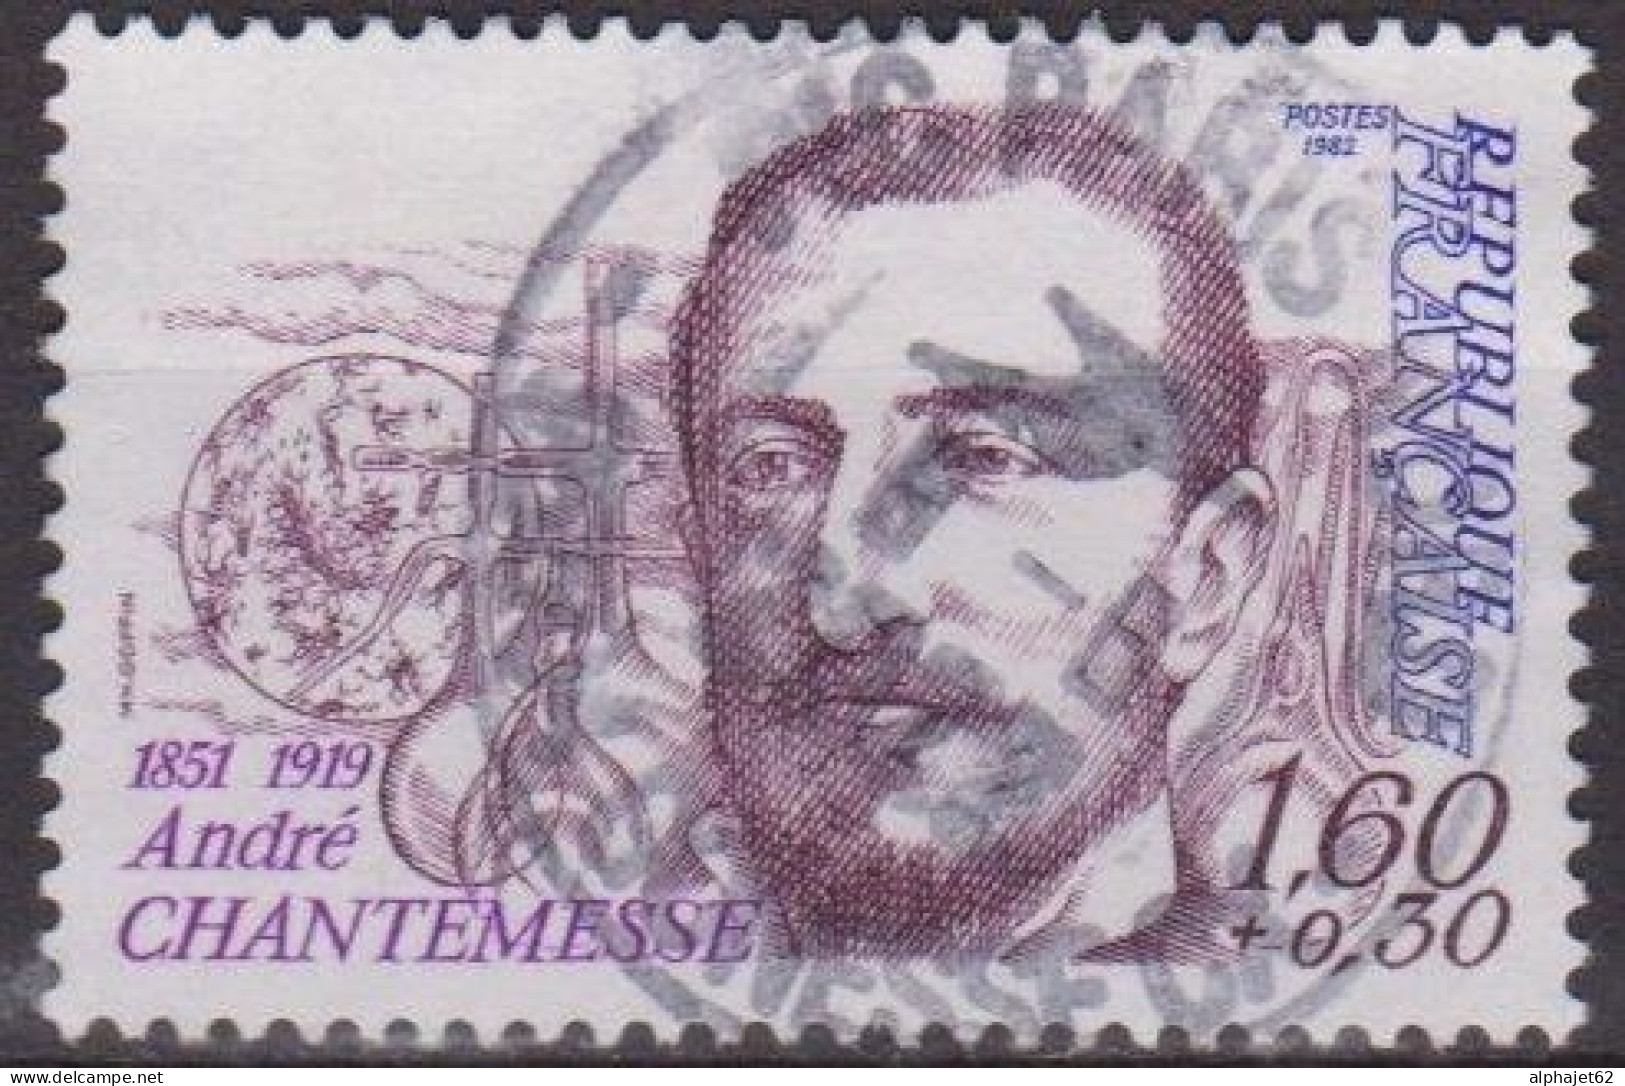 Médecine - FRANCE - André Chantemesse, Bactériologiste - N° 2229 - 1982 - Used Stamps